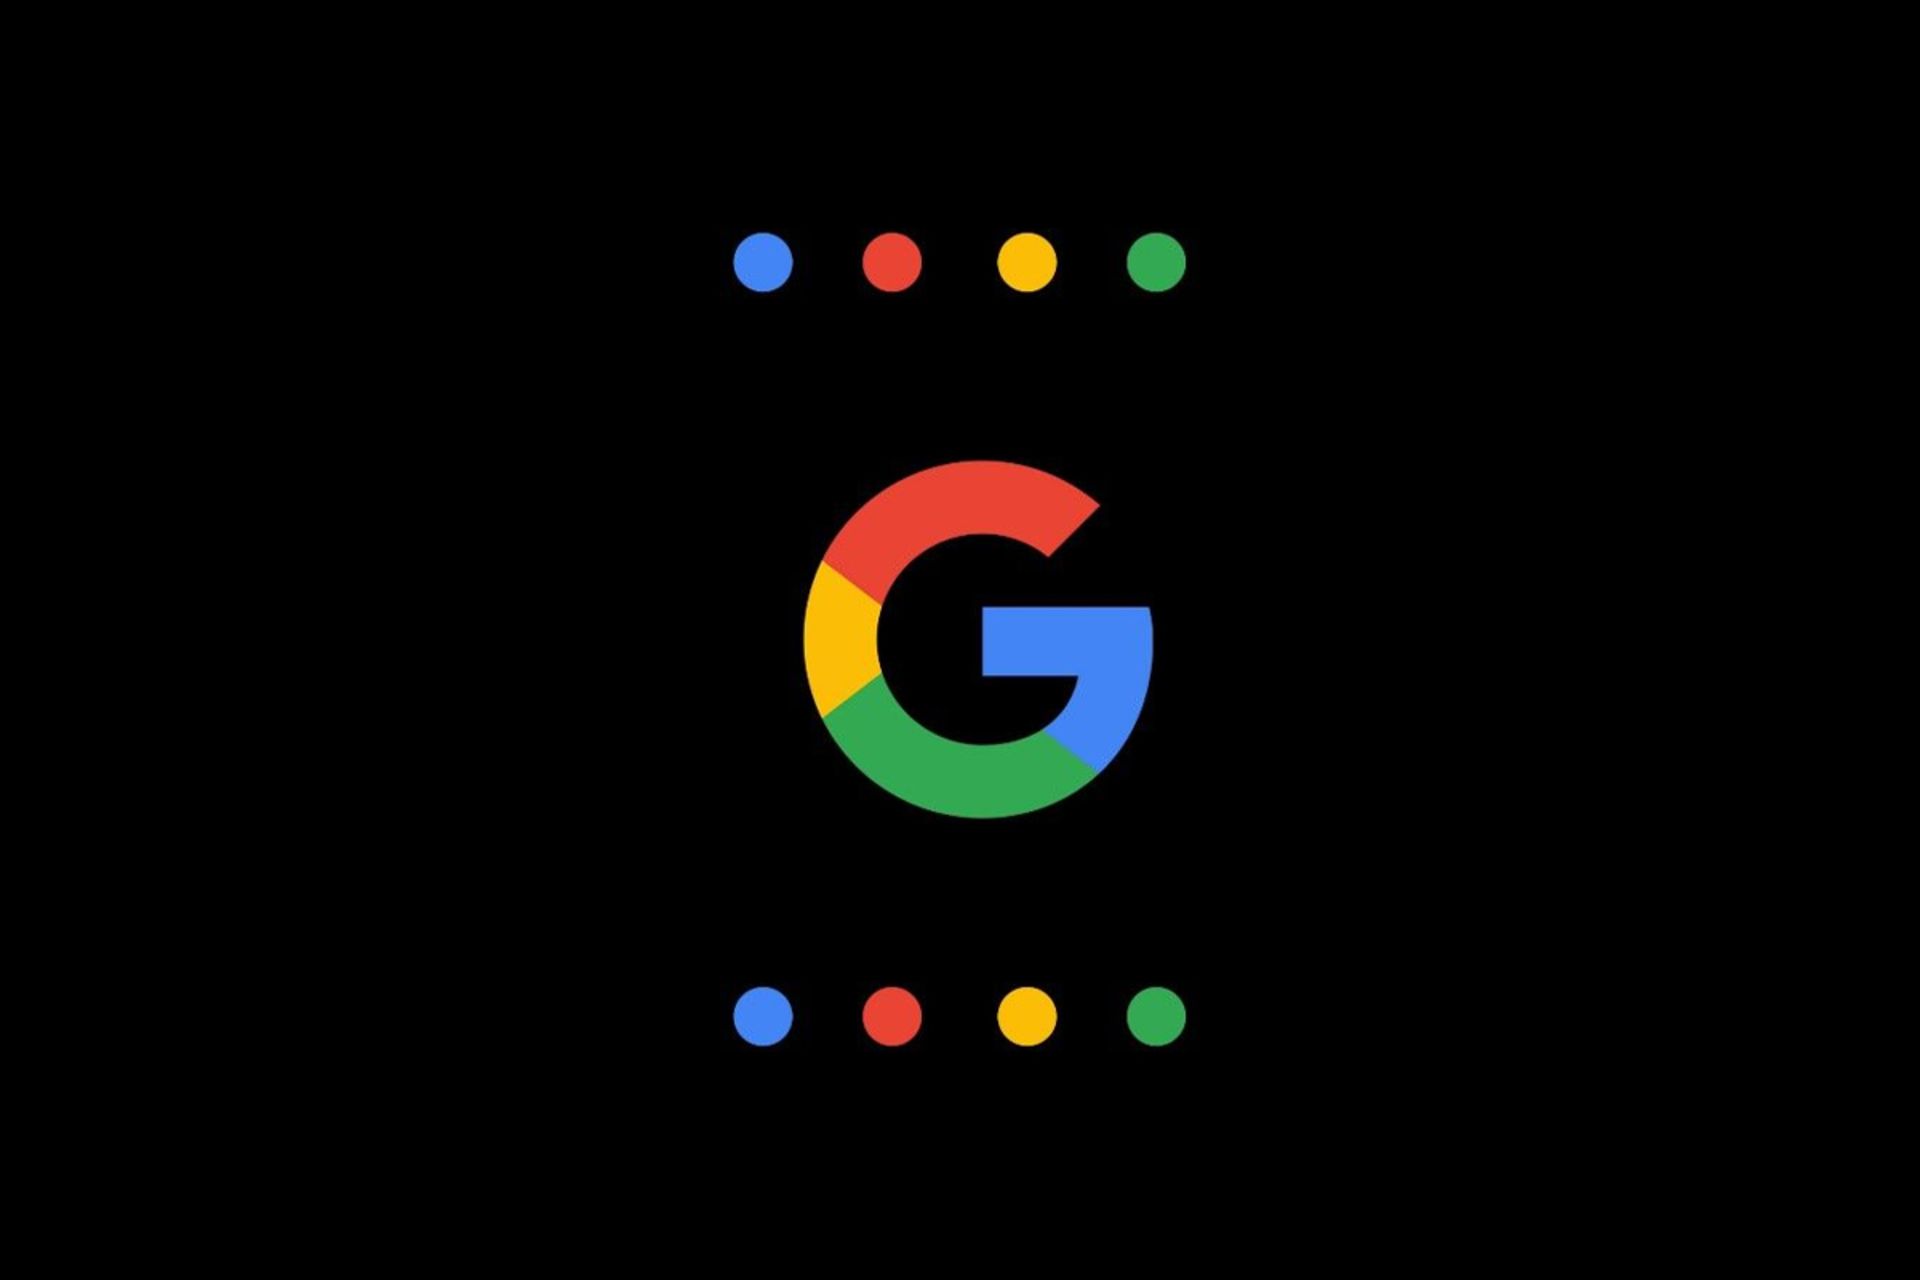 گوگل / Google